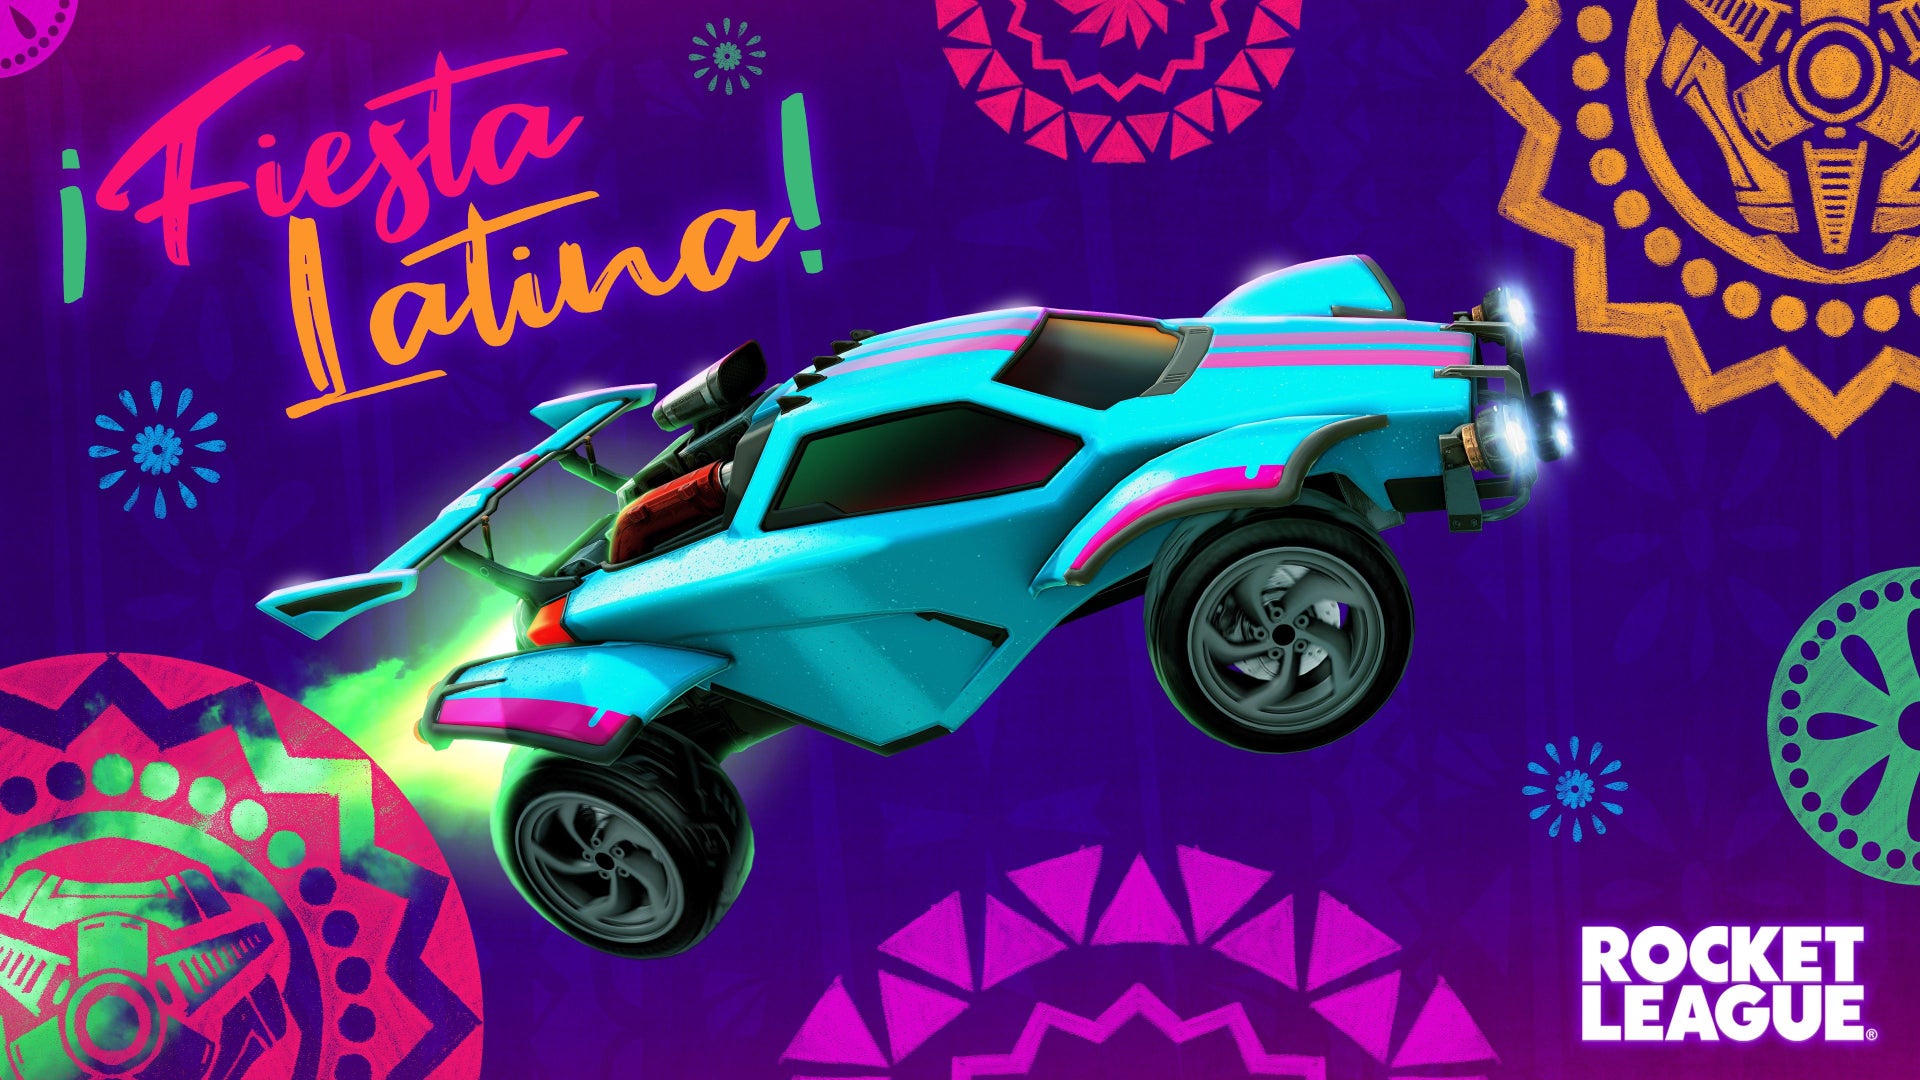 Celebra ¡Fiesta Latina! con un lote de música gratis   Image